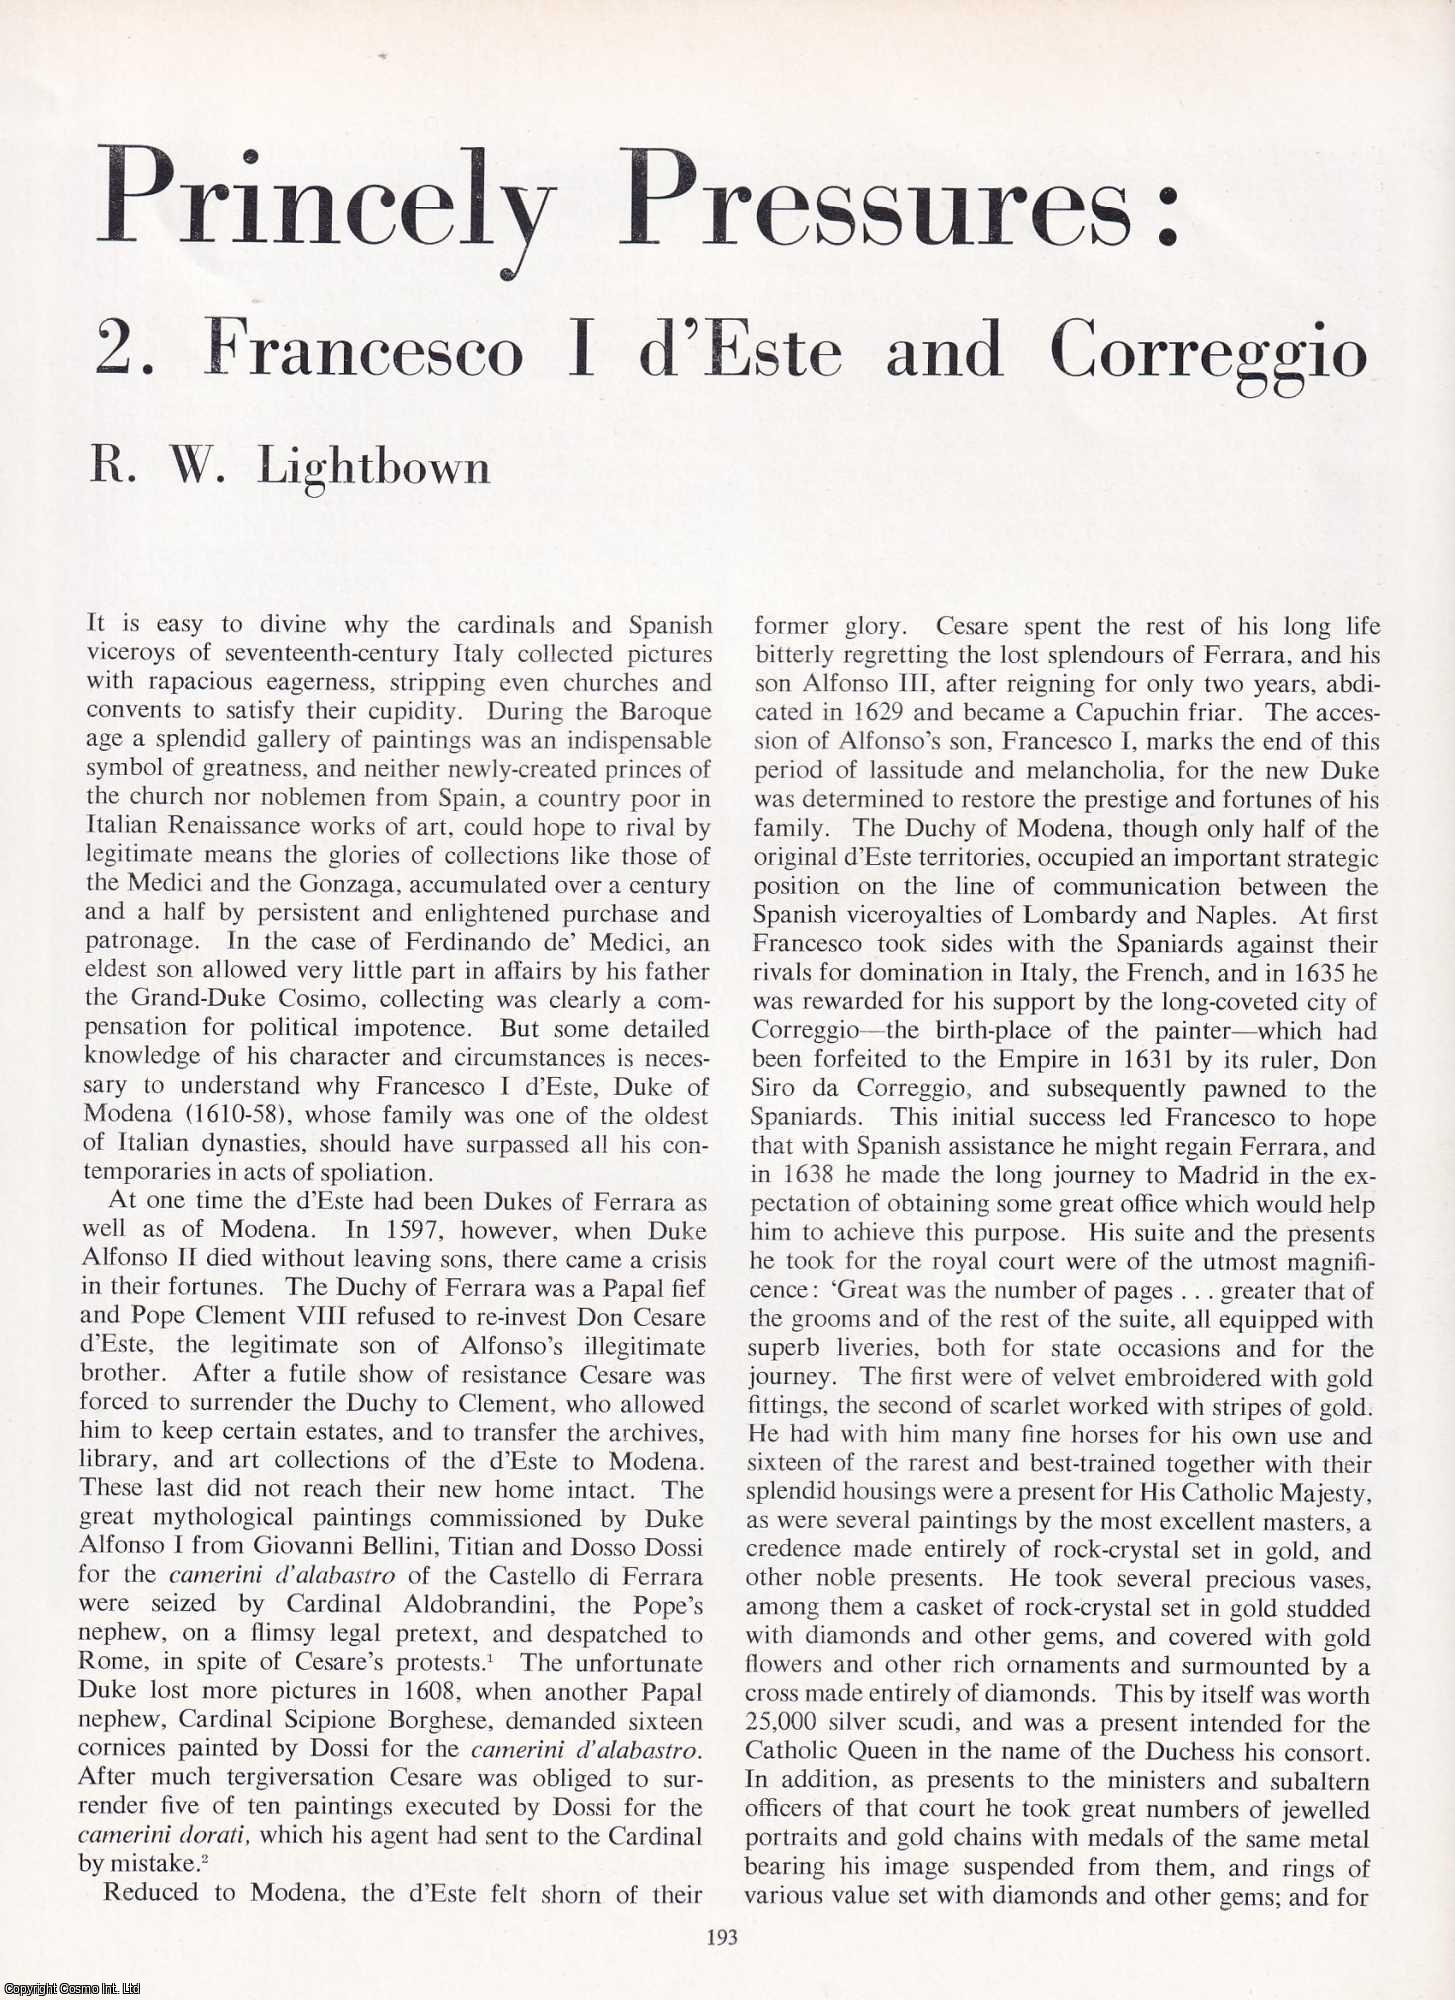 R.W. Lightbown - Francesco I d'Este and Correggio. An original article from Apollo, International Magazine of the Arts, 1963.